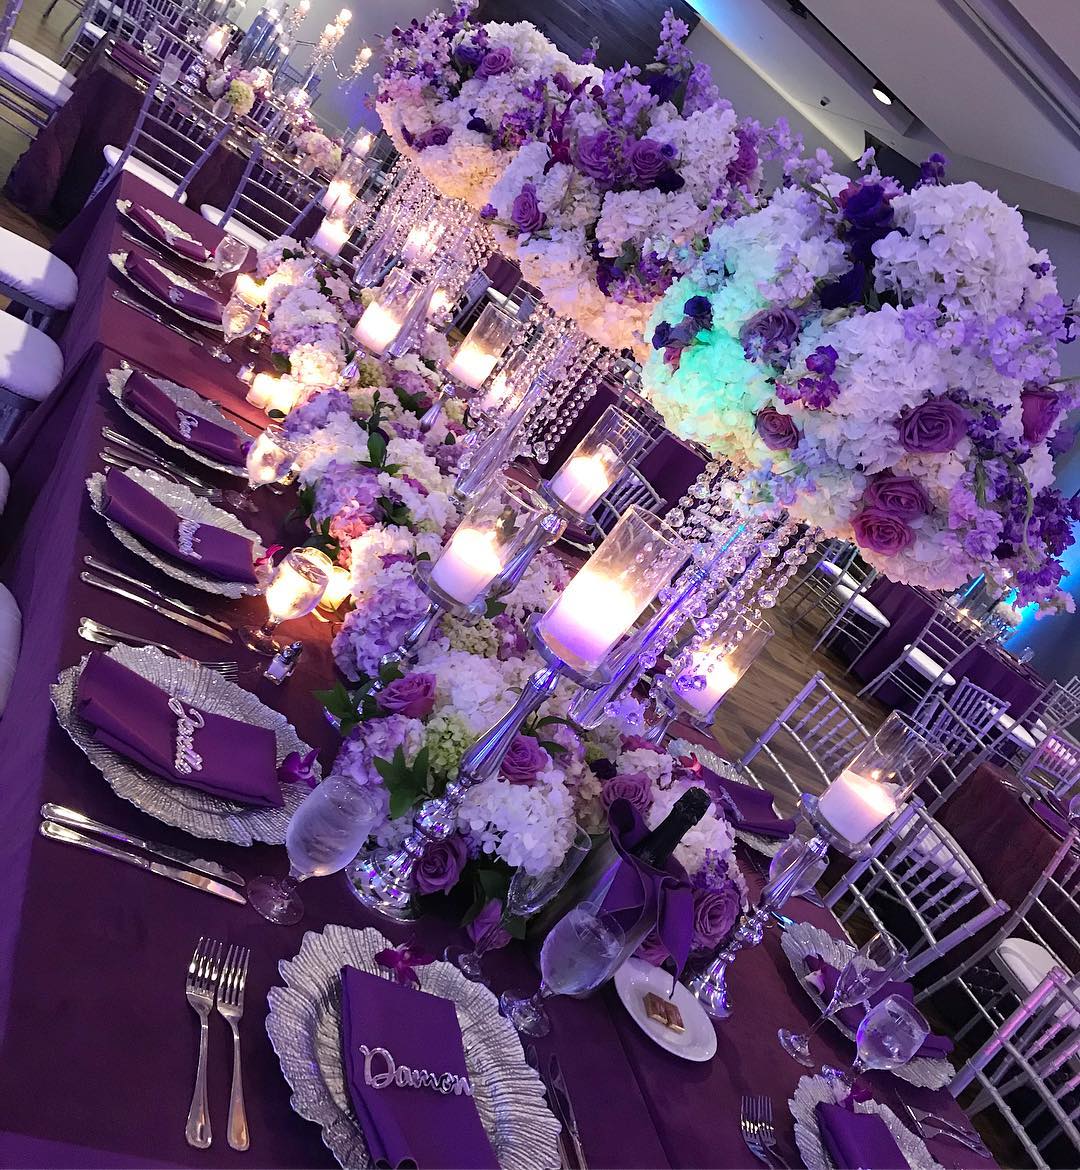 Purple Table Decor